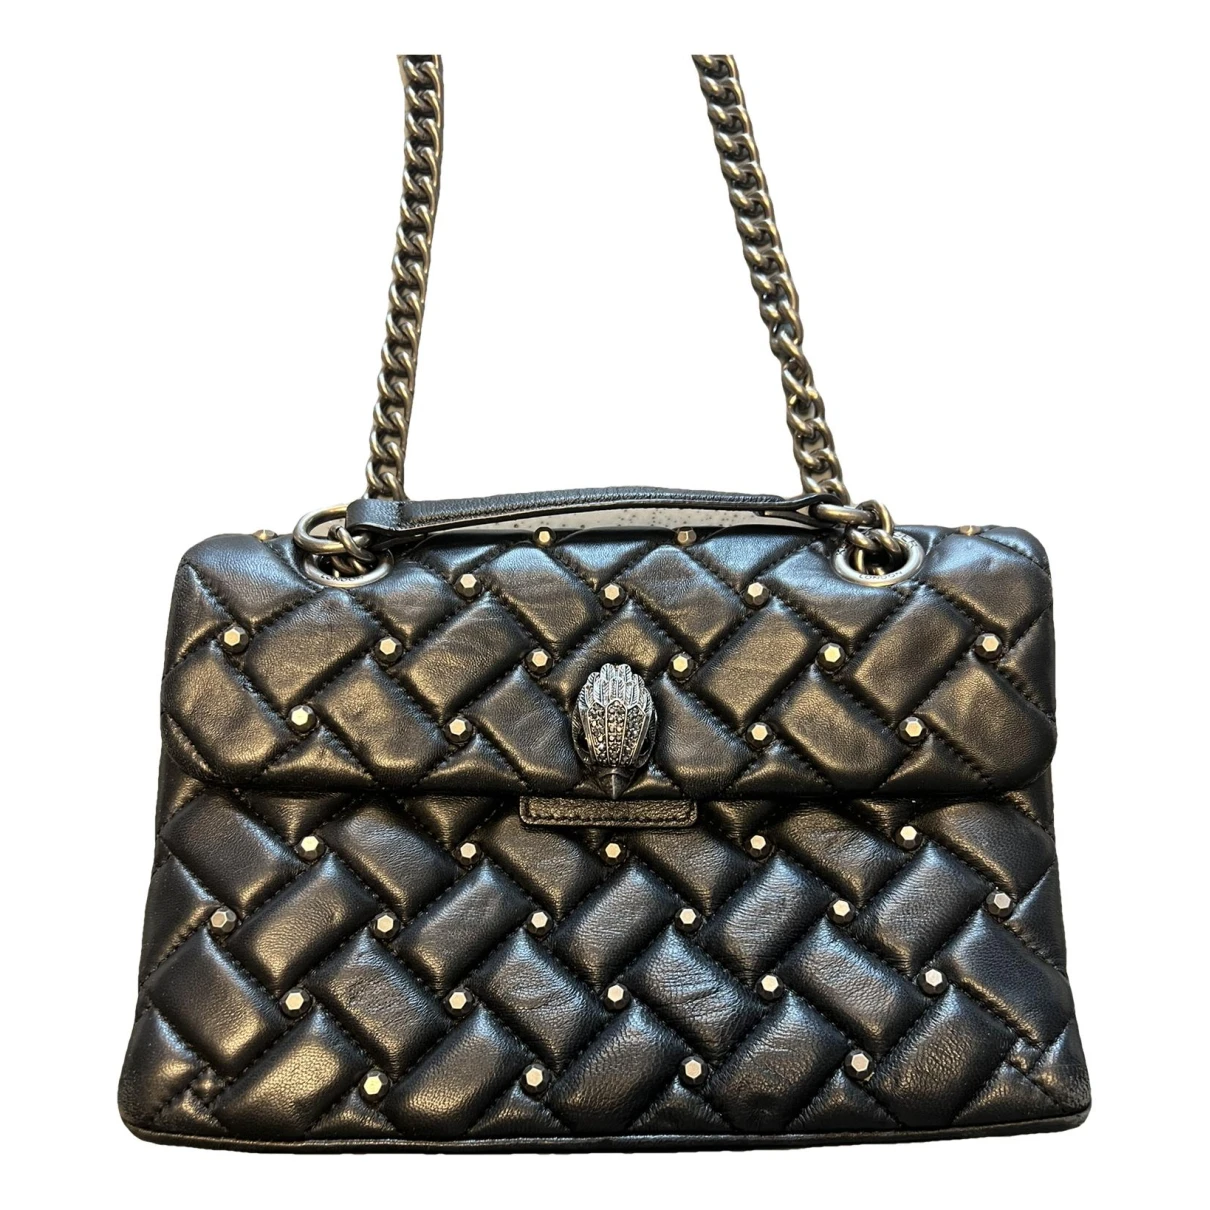 Pre-owned Kurt Geiger Vegan Leather Handbag In Black